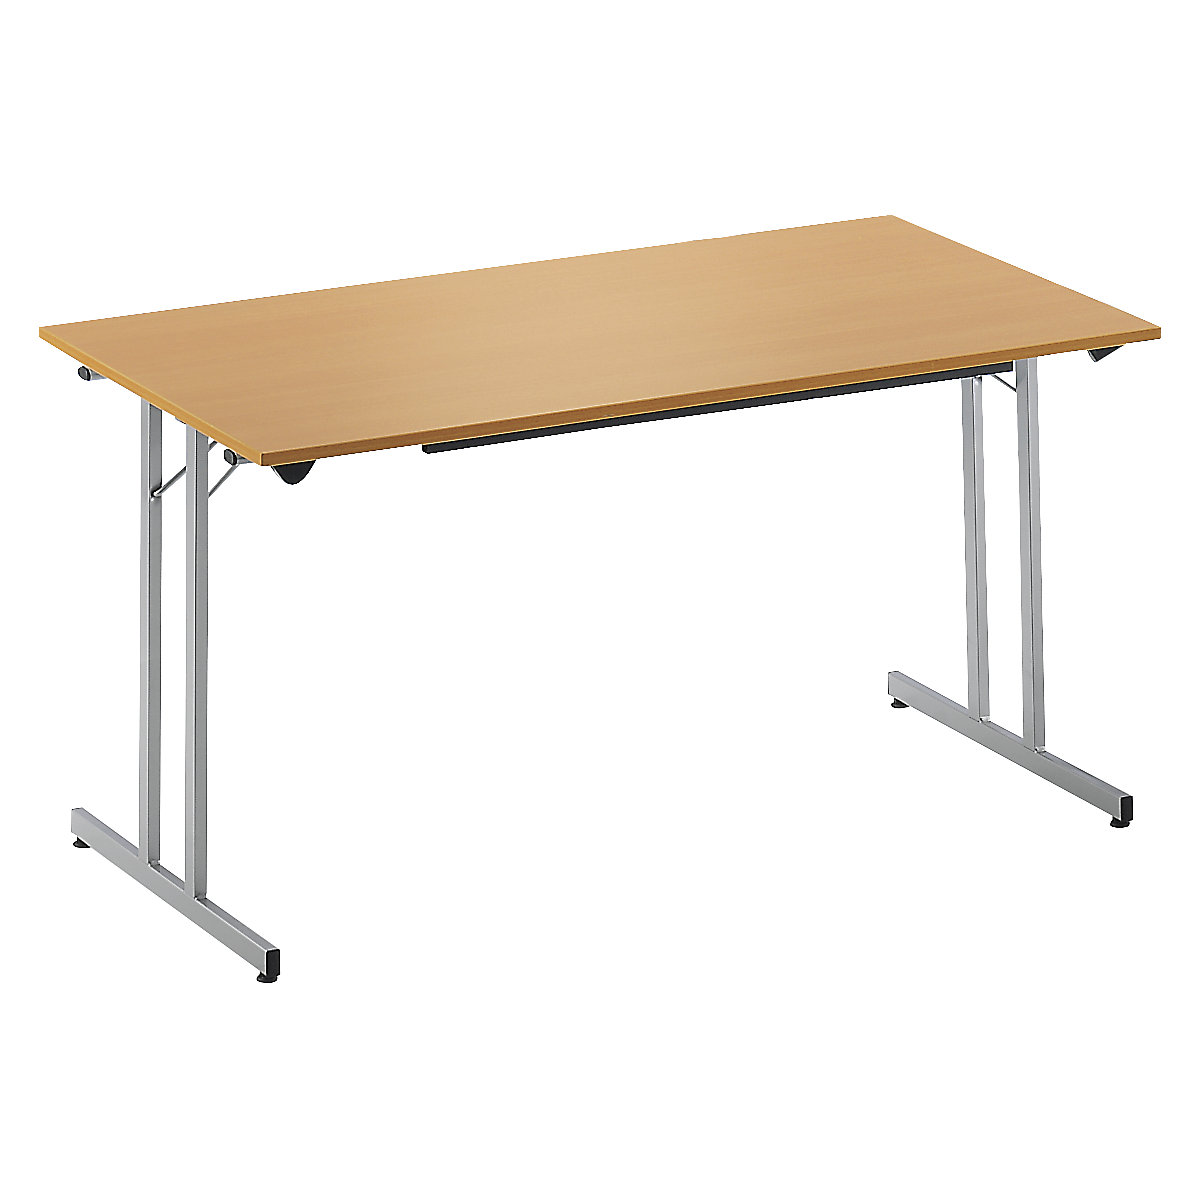 STANDARDNA zložljiva miza, štirikotno ogrodje z vijaki za izravnavo višine, 1200 x 600 mm, ogrodje aluminijaste barve, plošča imitacije bukve-3